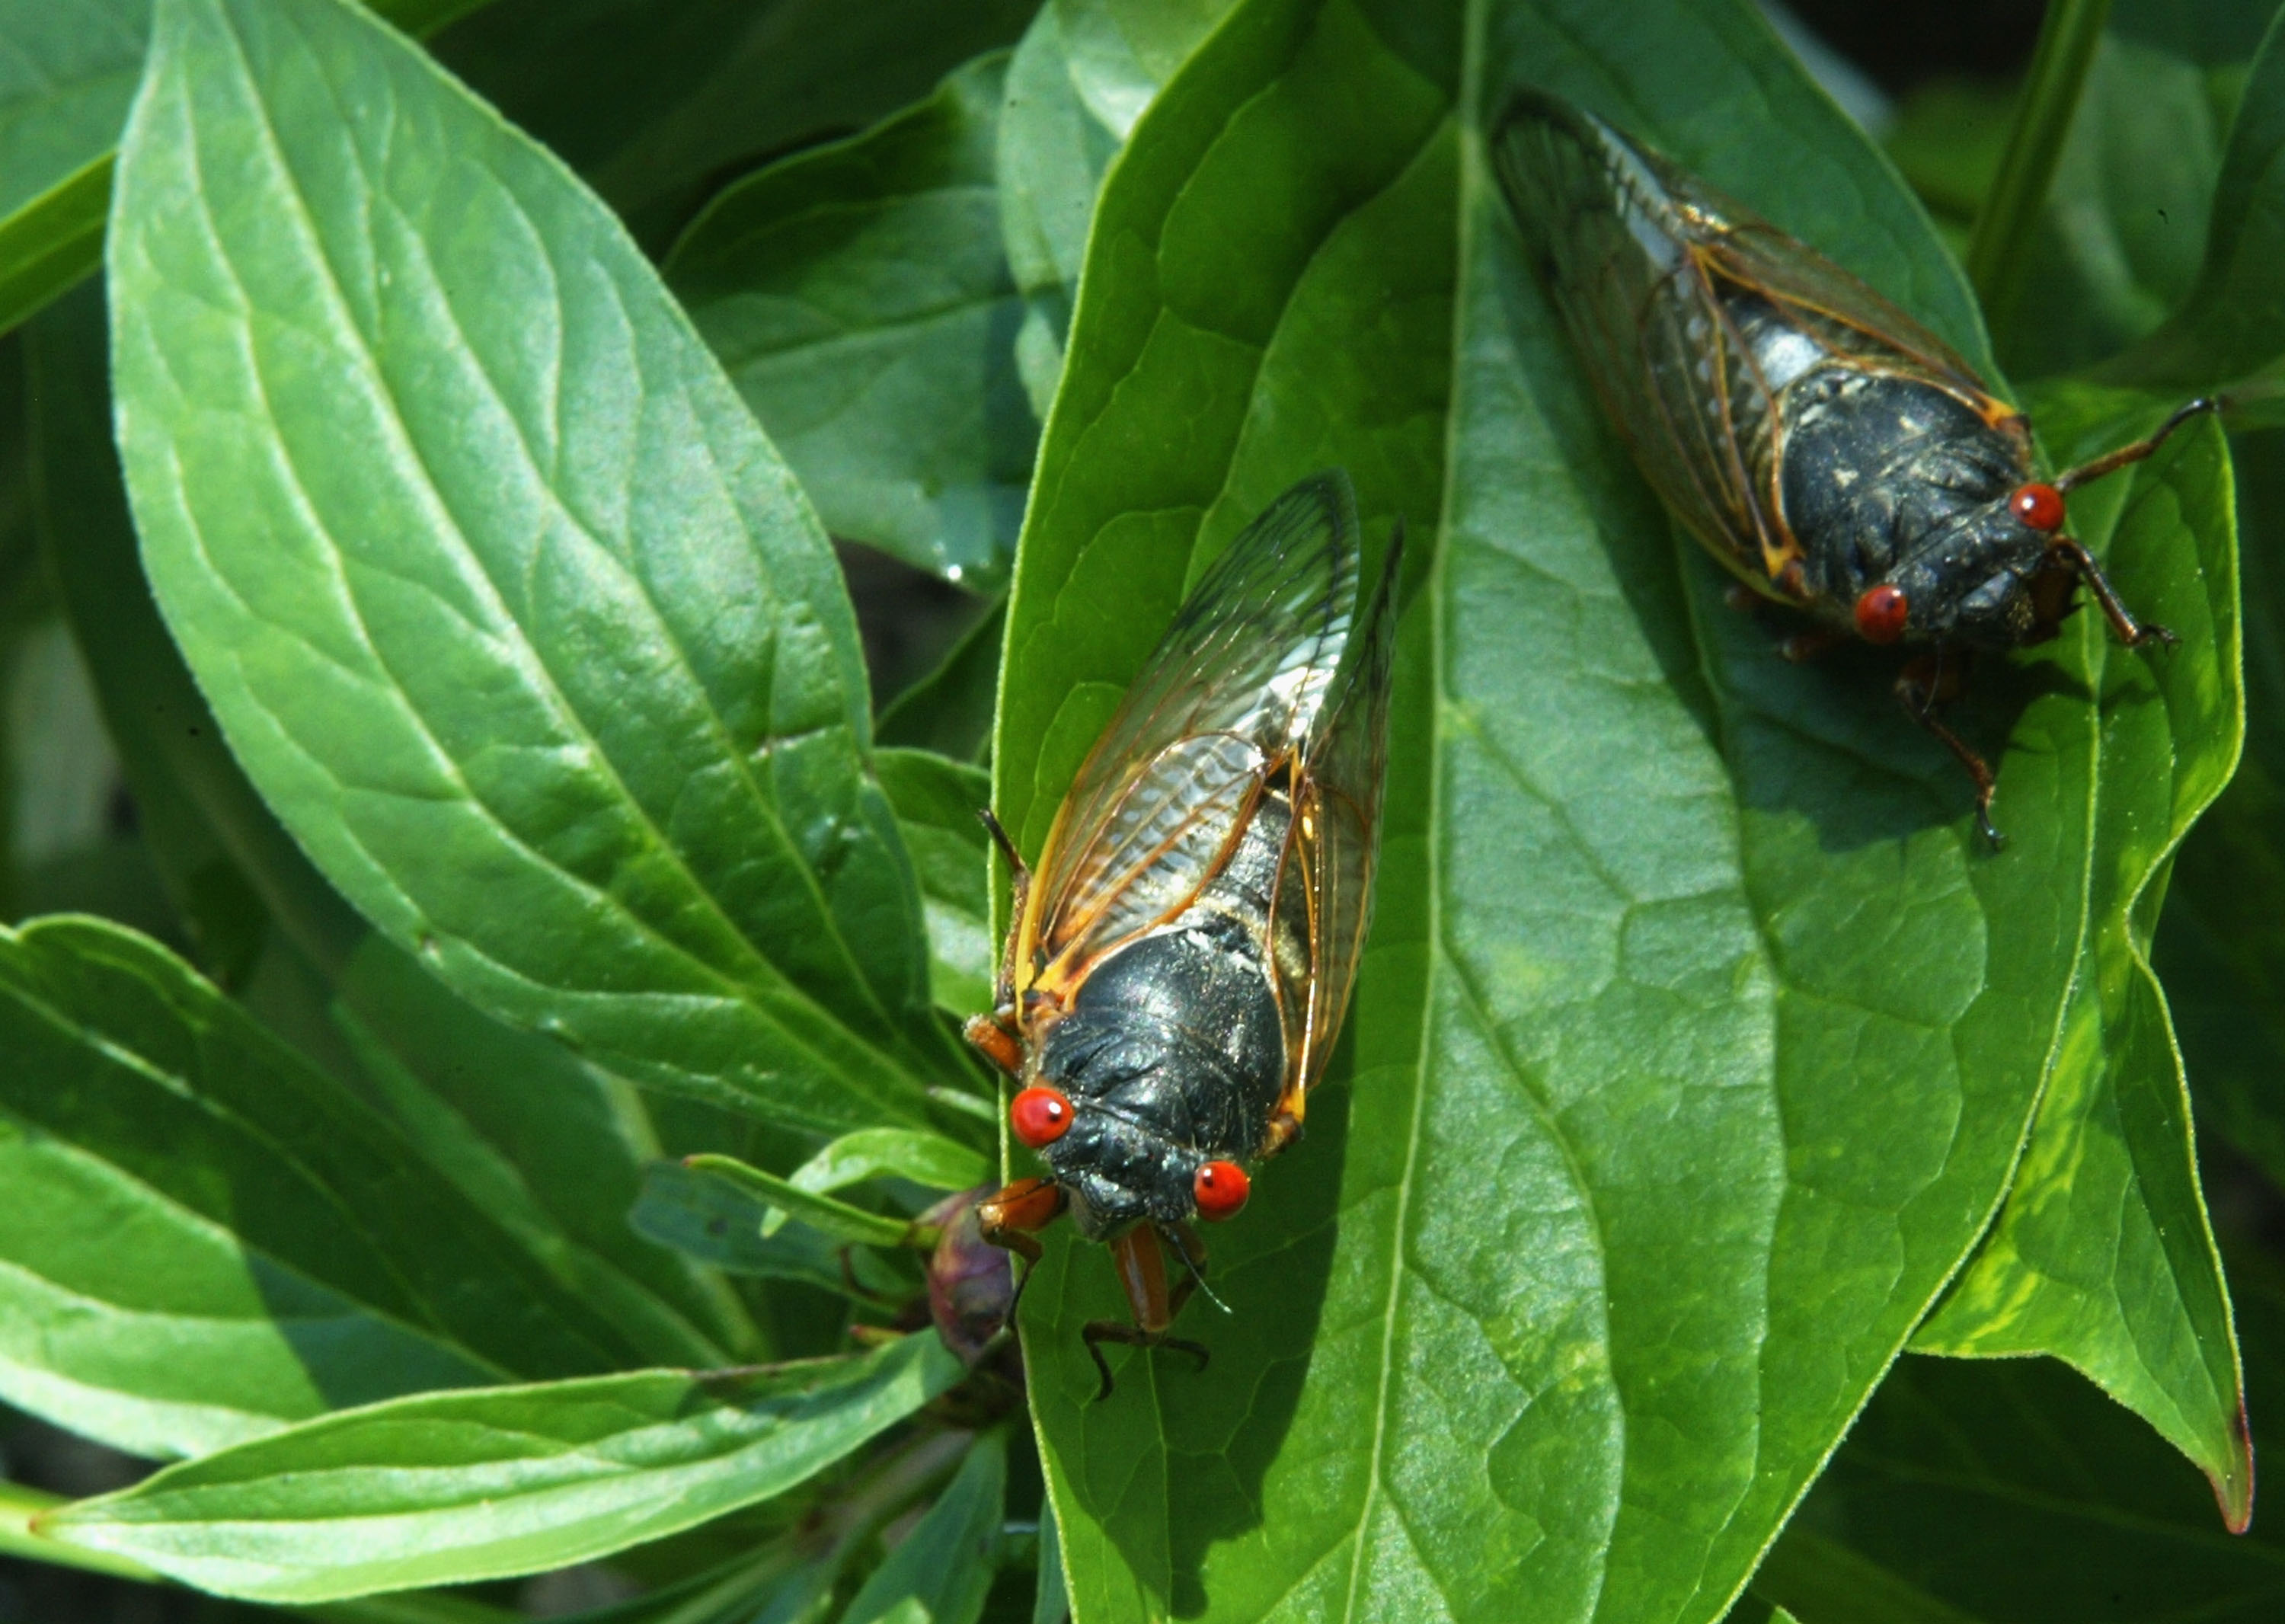 Amorous Cicada Blamed For Causing Car Crash in Ohio